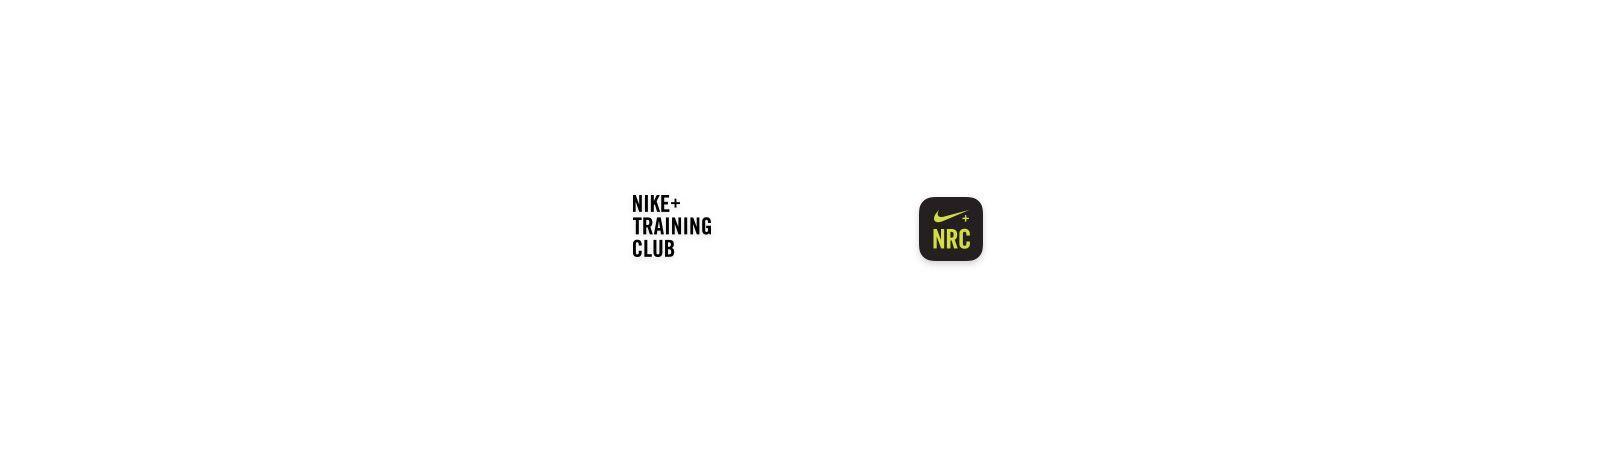 Nike Plus Logo - Nike+ Training App for iPhone & Android. Nike.com (AE)